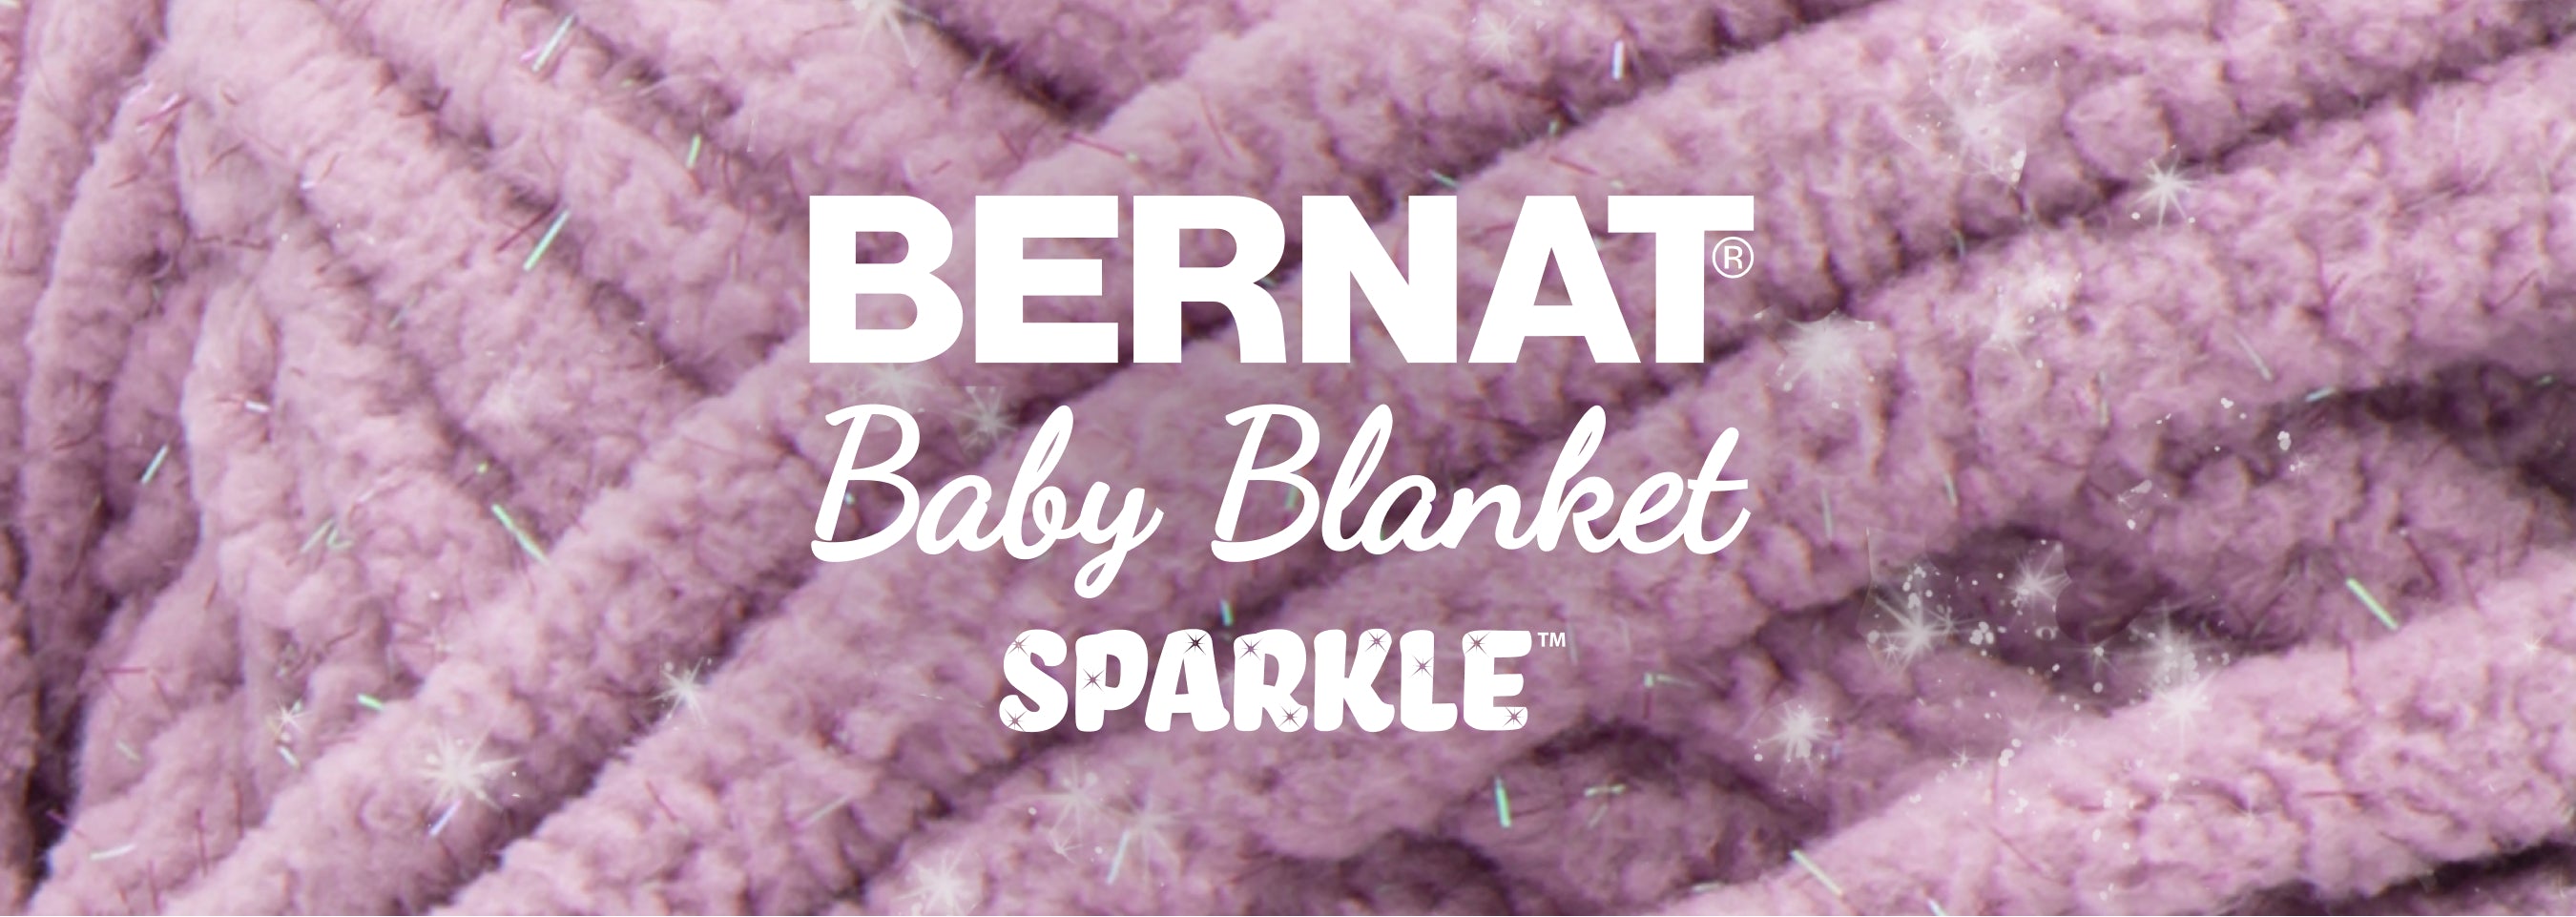 Bernat Baby Blanket Sparkle